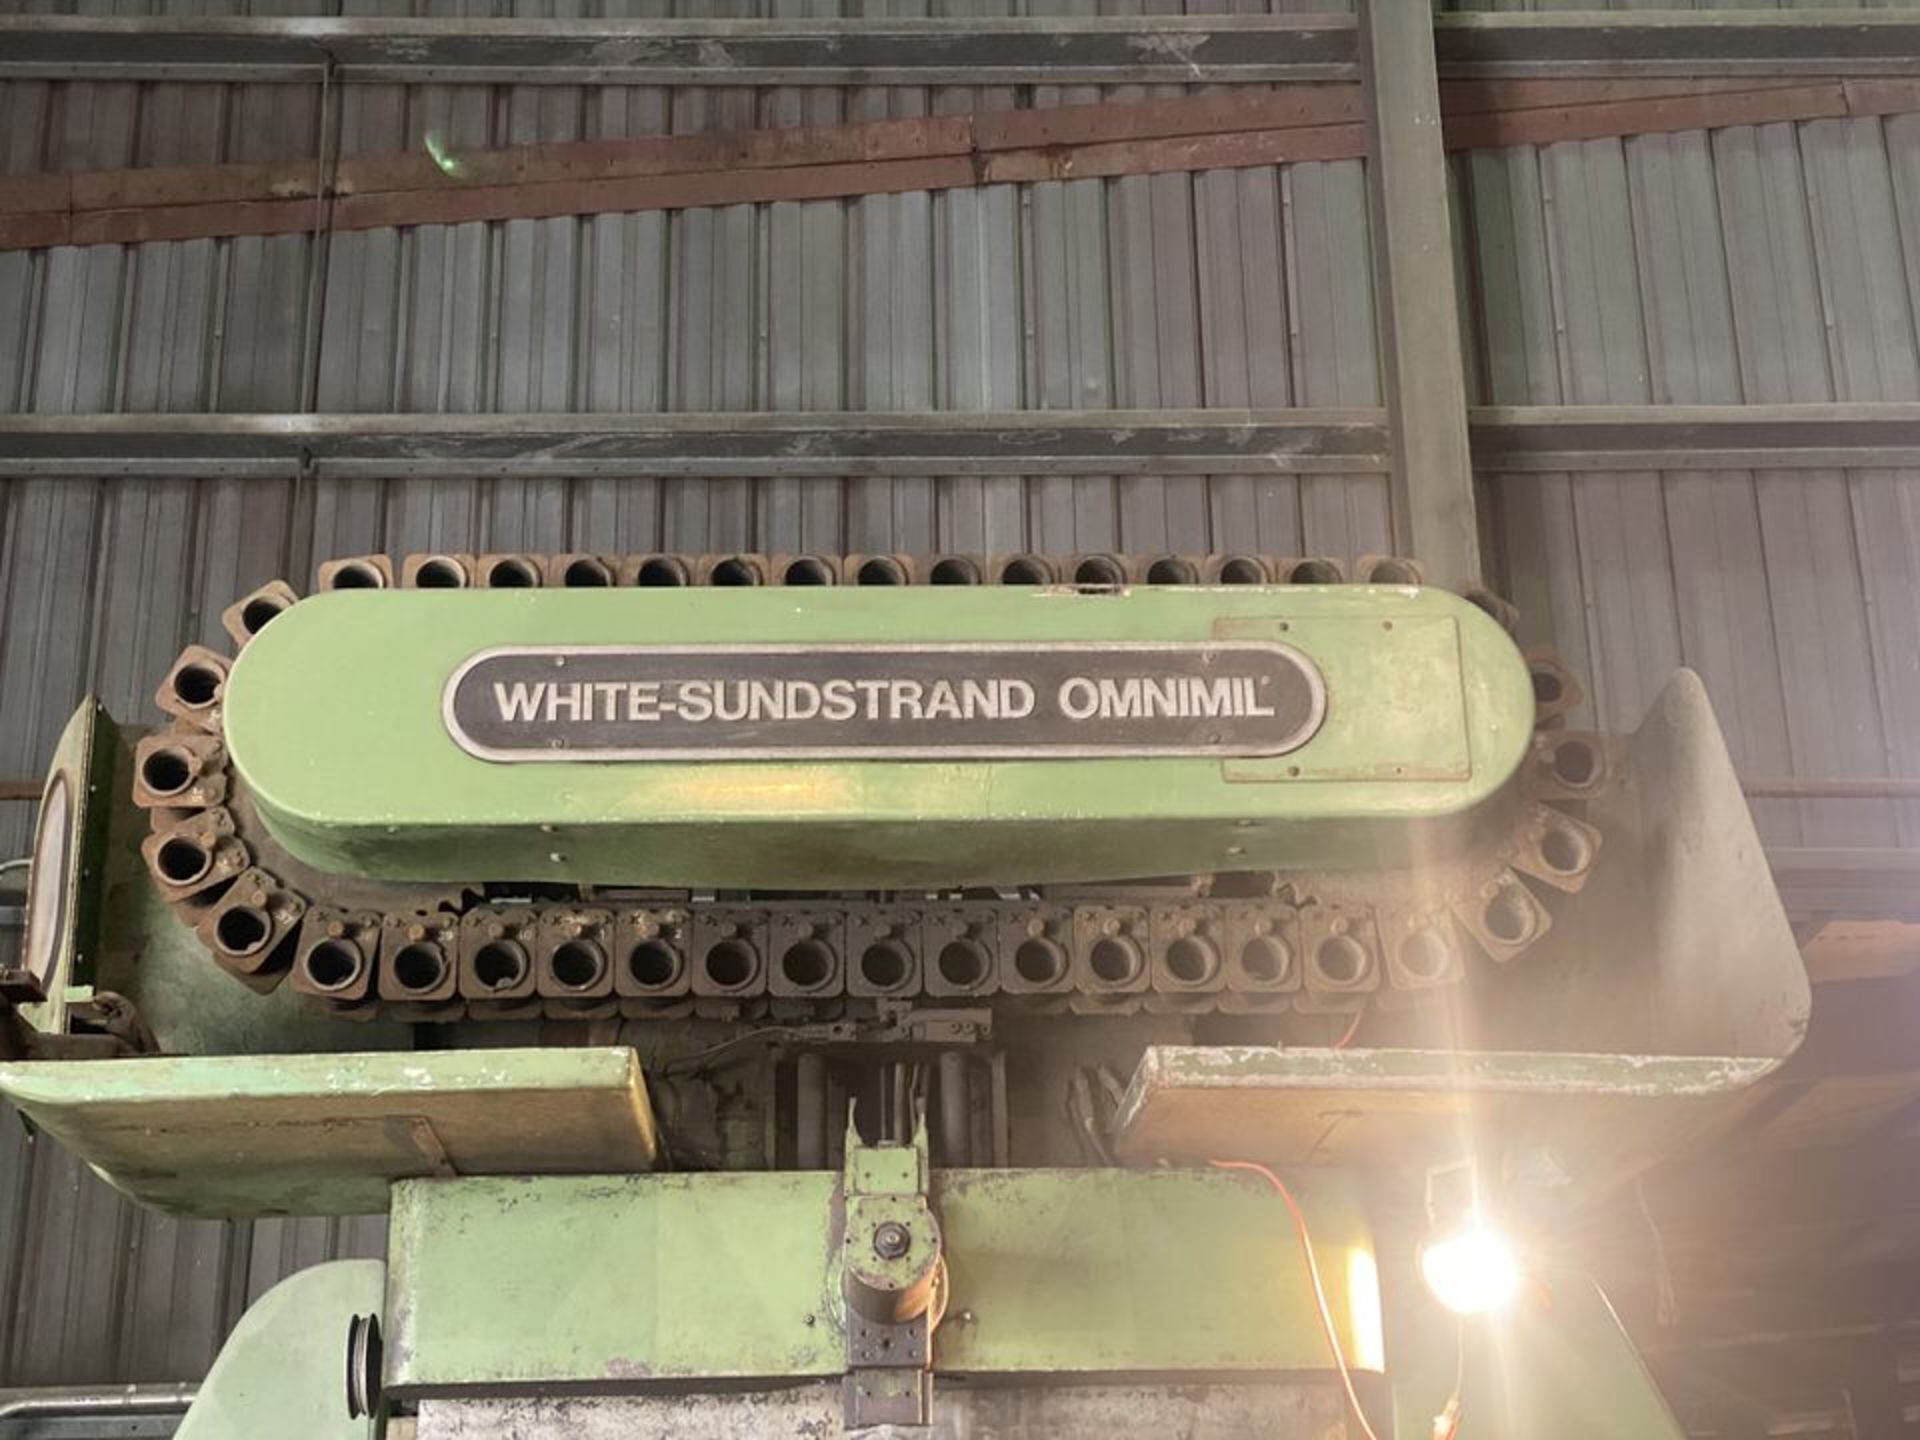 White-Sundstrand Model S60 Omnimill Milling Machine - Image 9 of 9